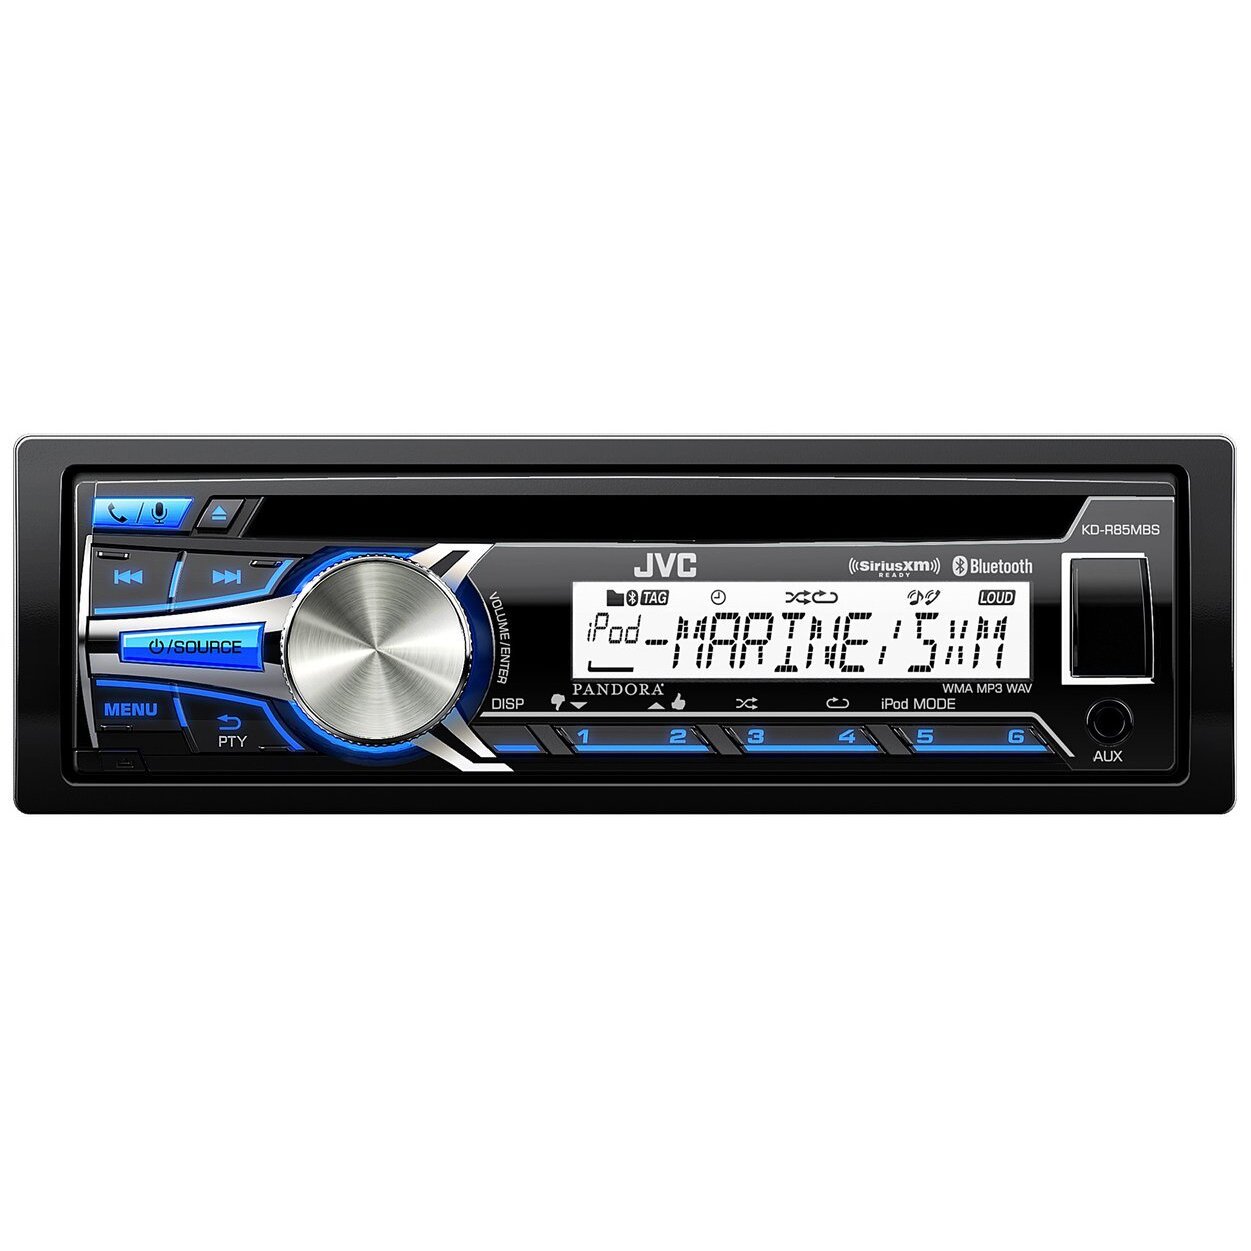 JVC KD-R85MBS AM/FM Radio Receiver CD Player USB Port iPod Control SiriusXM Ready Bluetooth Pandora I Heart Radio Marine Stereo